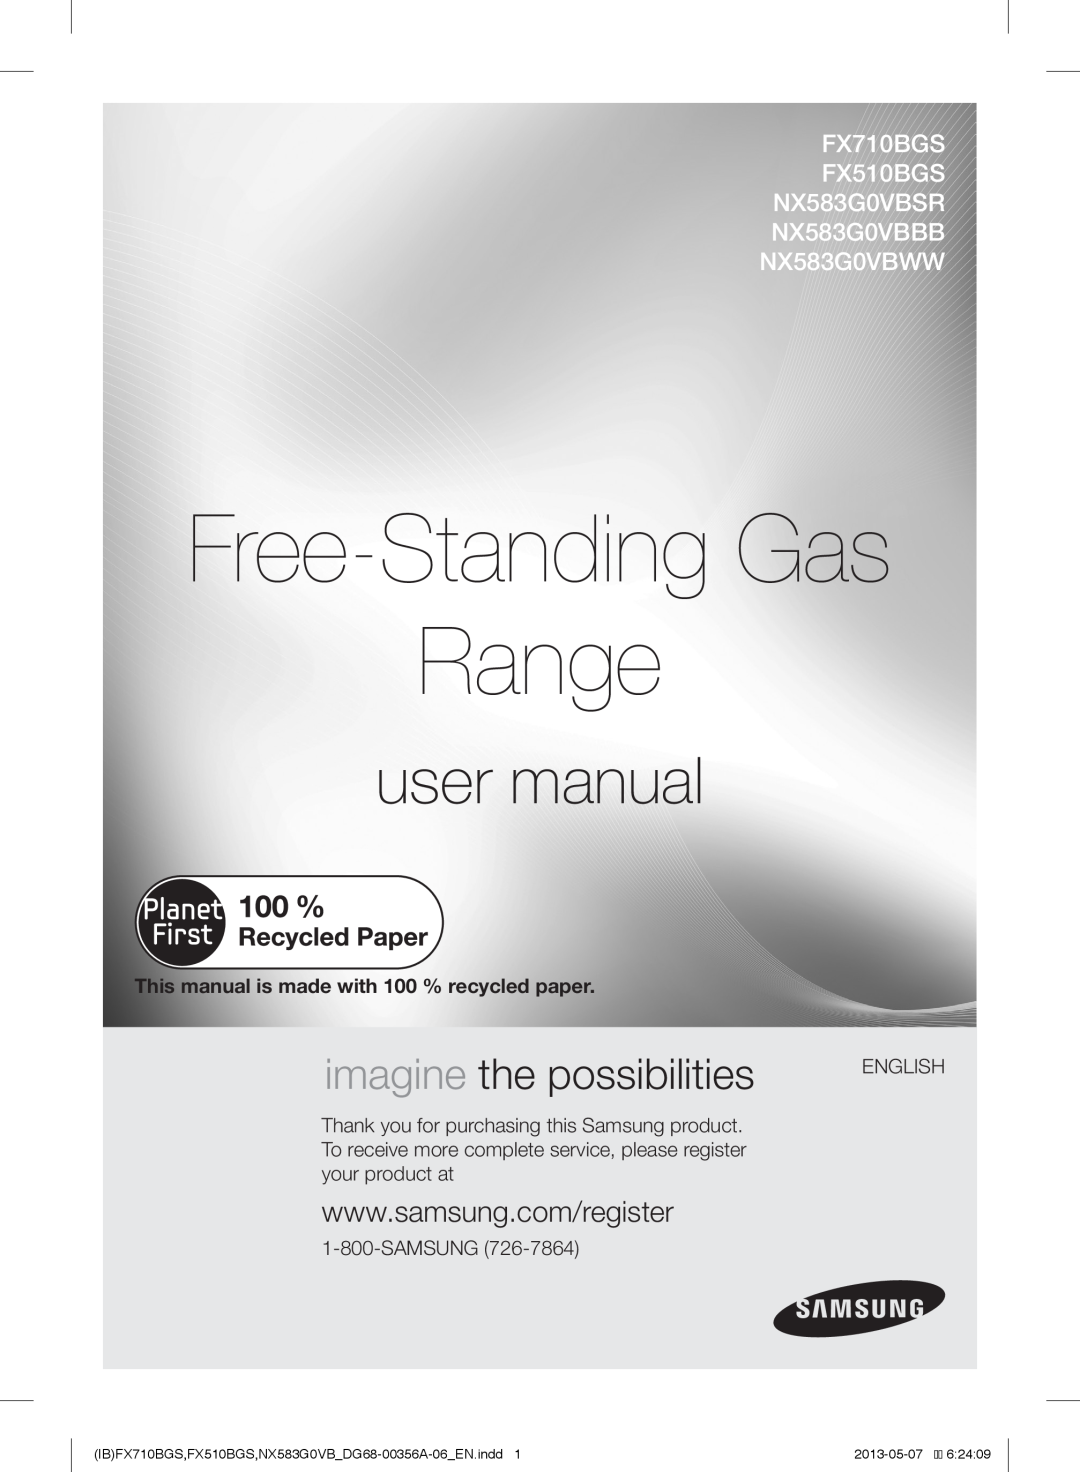 Samsung NX583GOVBSR, NX583GOVBBB, NX583GOVBWW user manual Free-Standing Gas Range, imagine the possibilities, 2013-05-07 